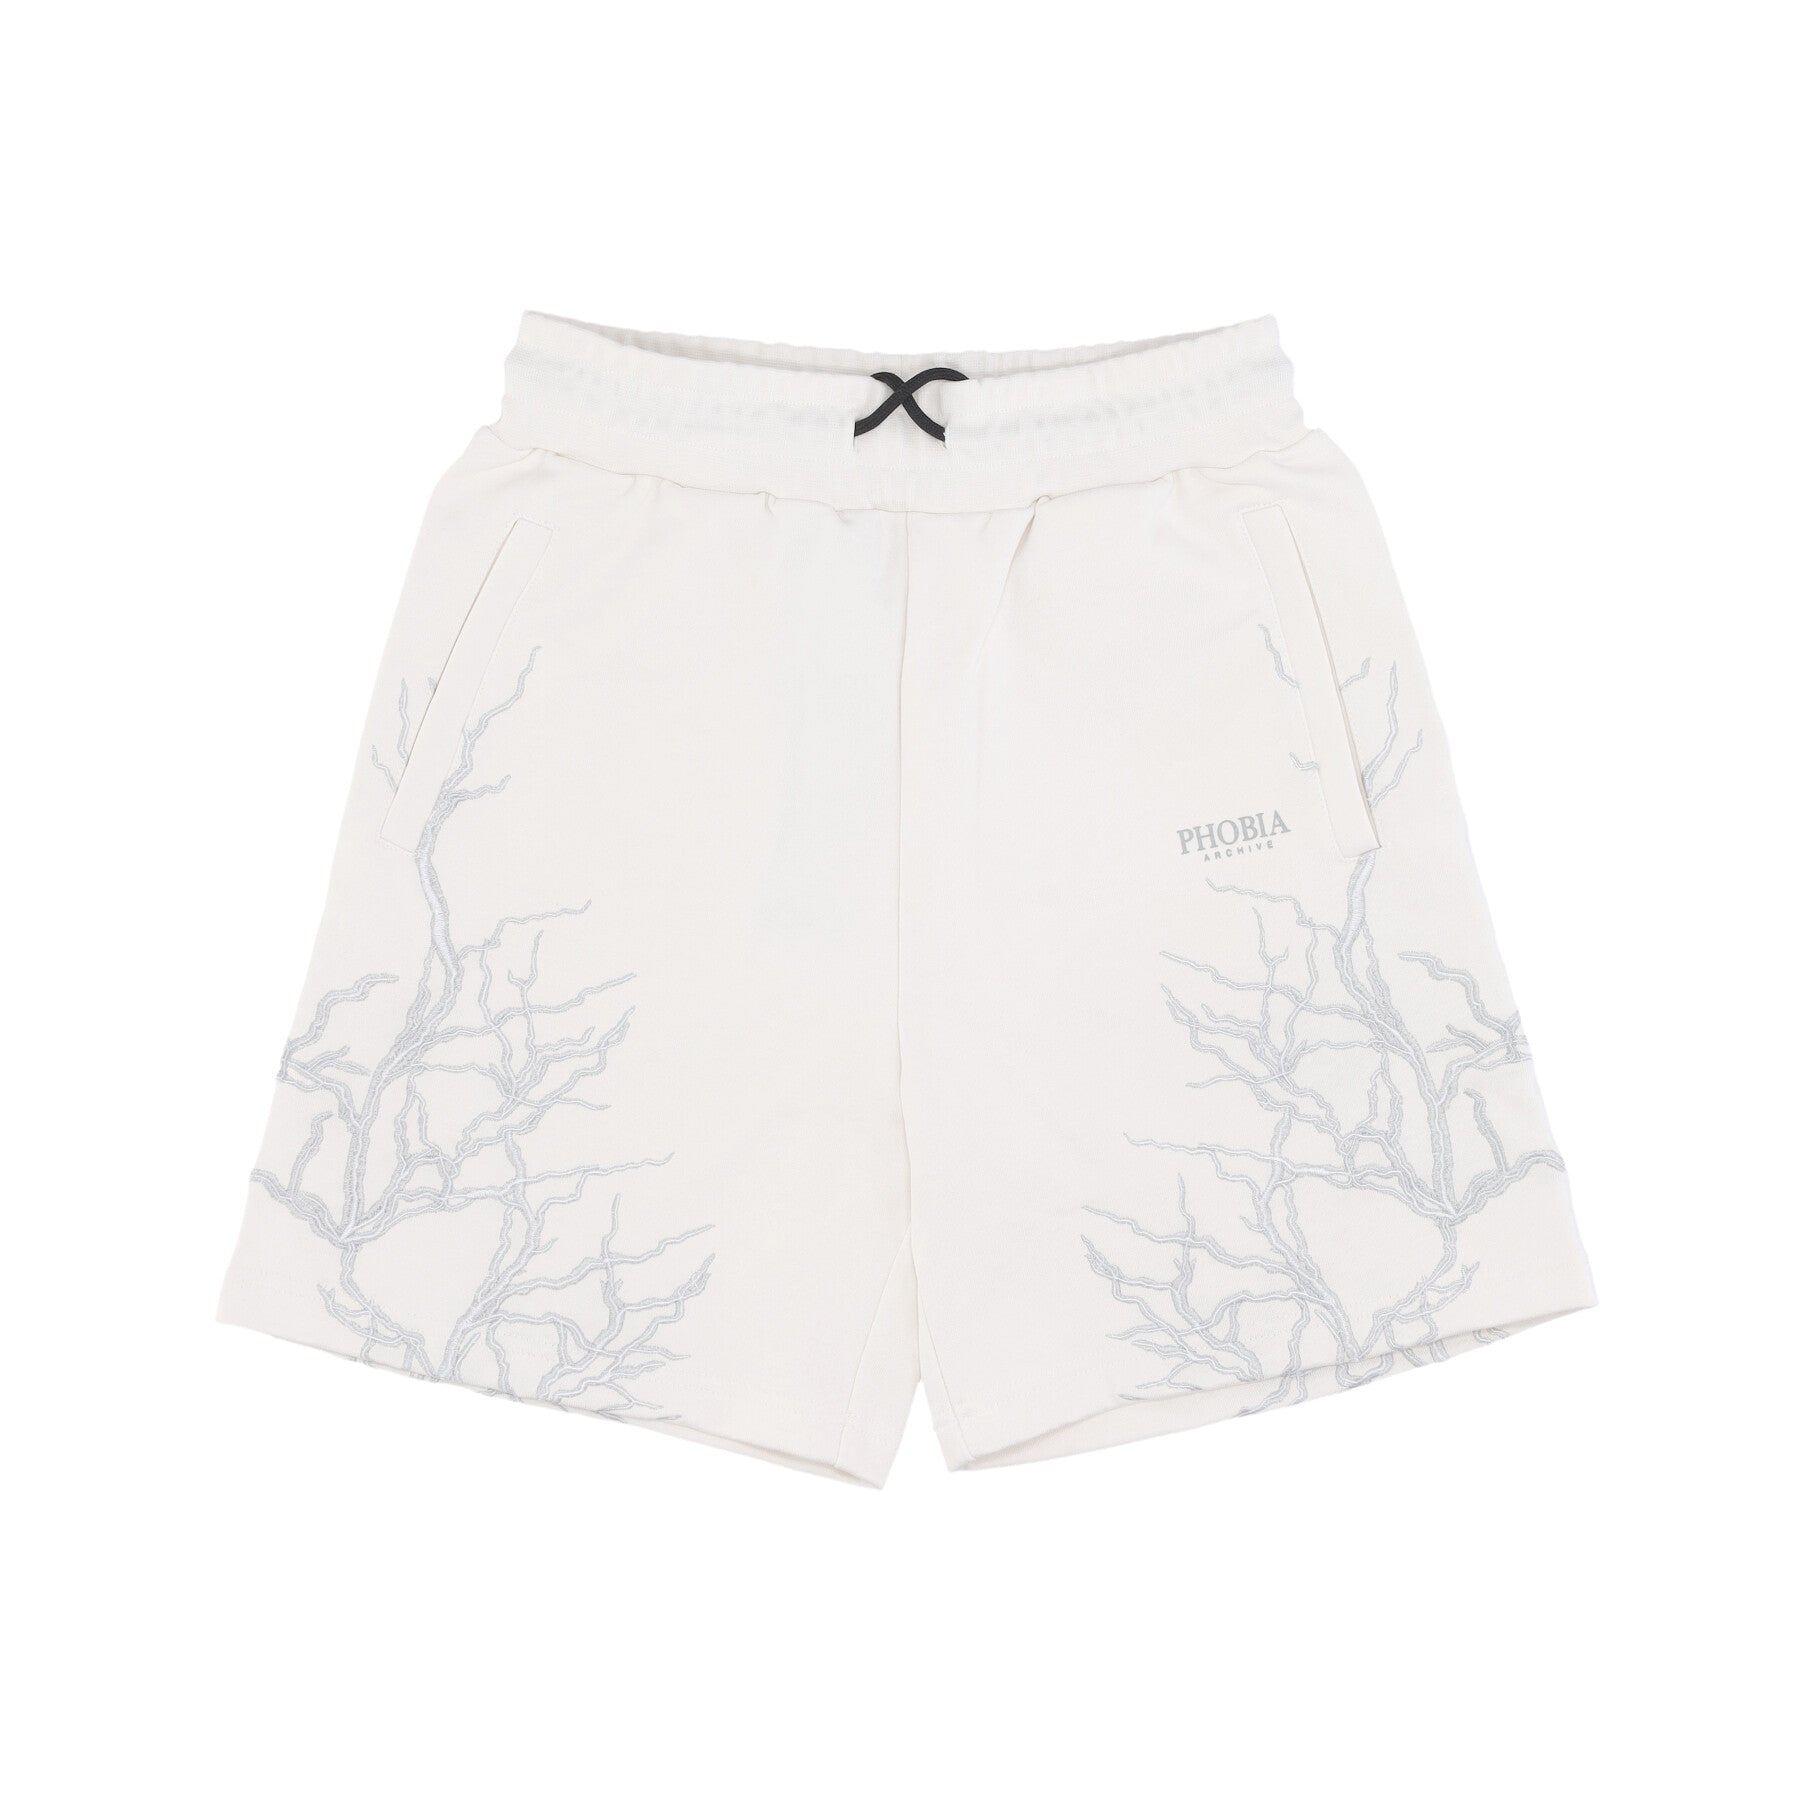 Pantalone Corto Tuta Uomo Embroidery Lightning Shorts White/grey PH00534